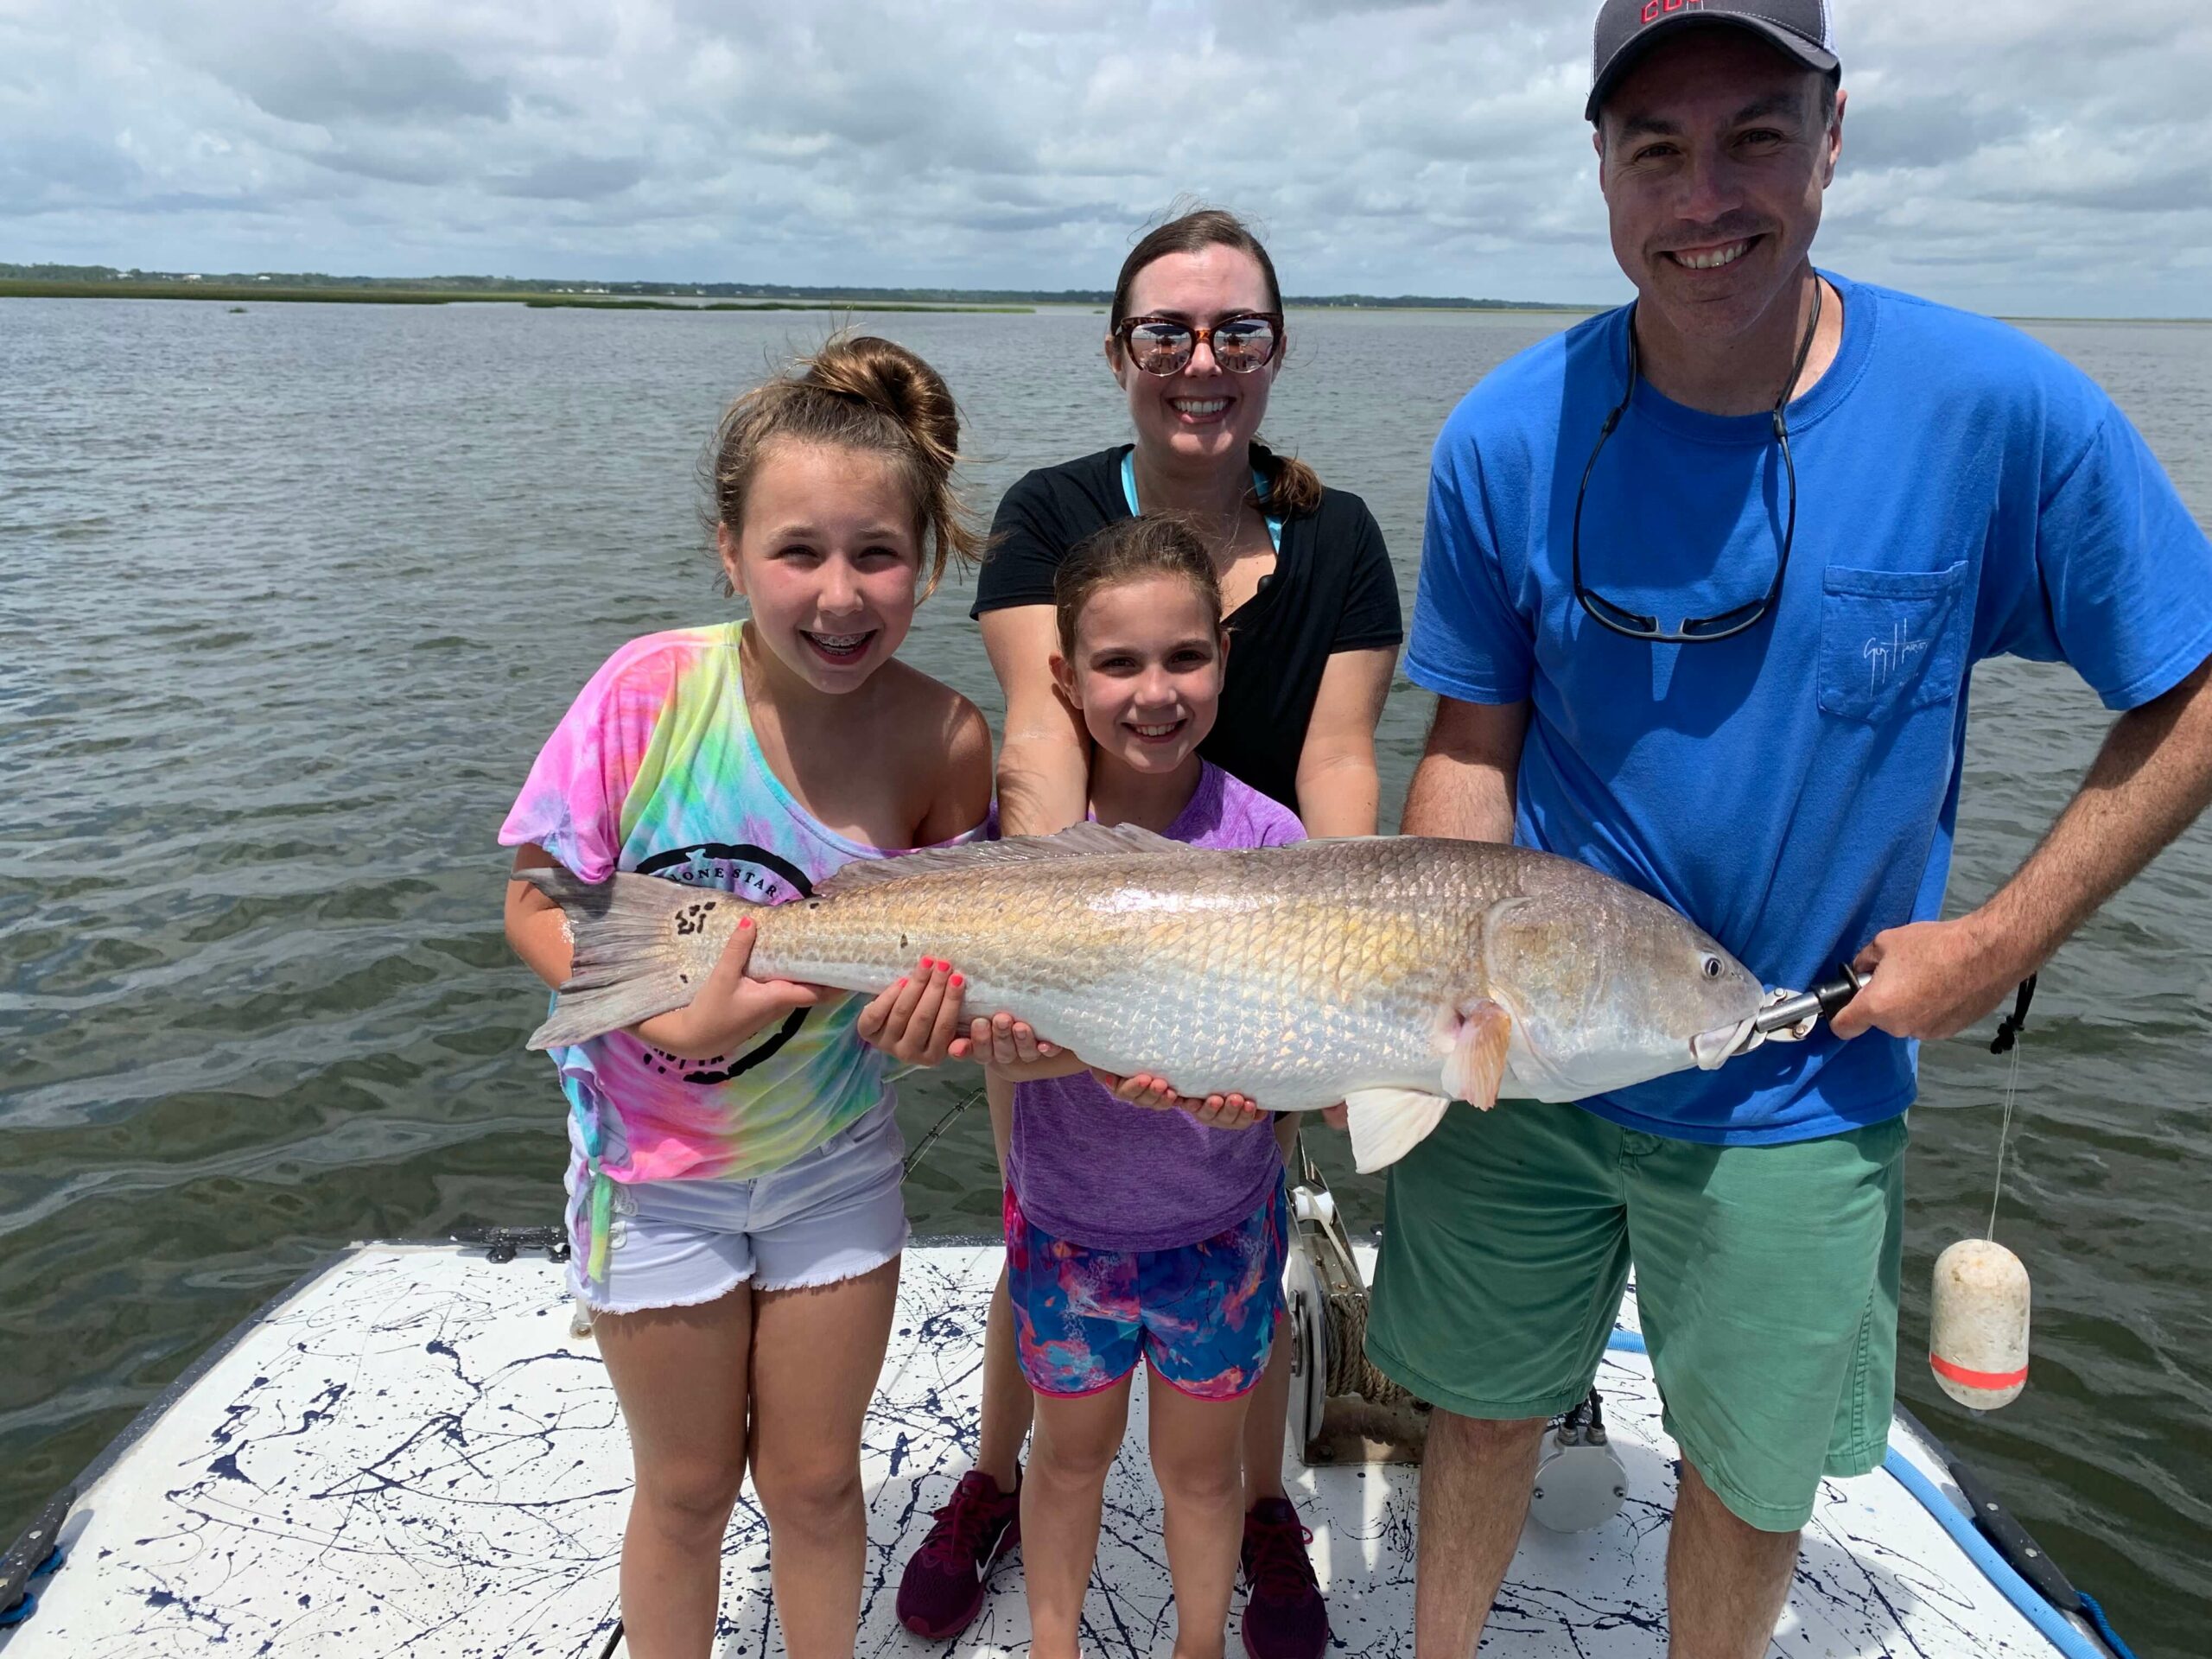 Amelia Island Fishing Reports: Kids And Fishing